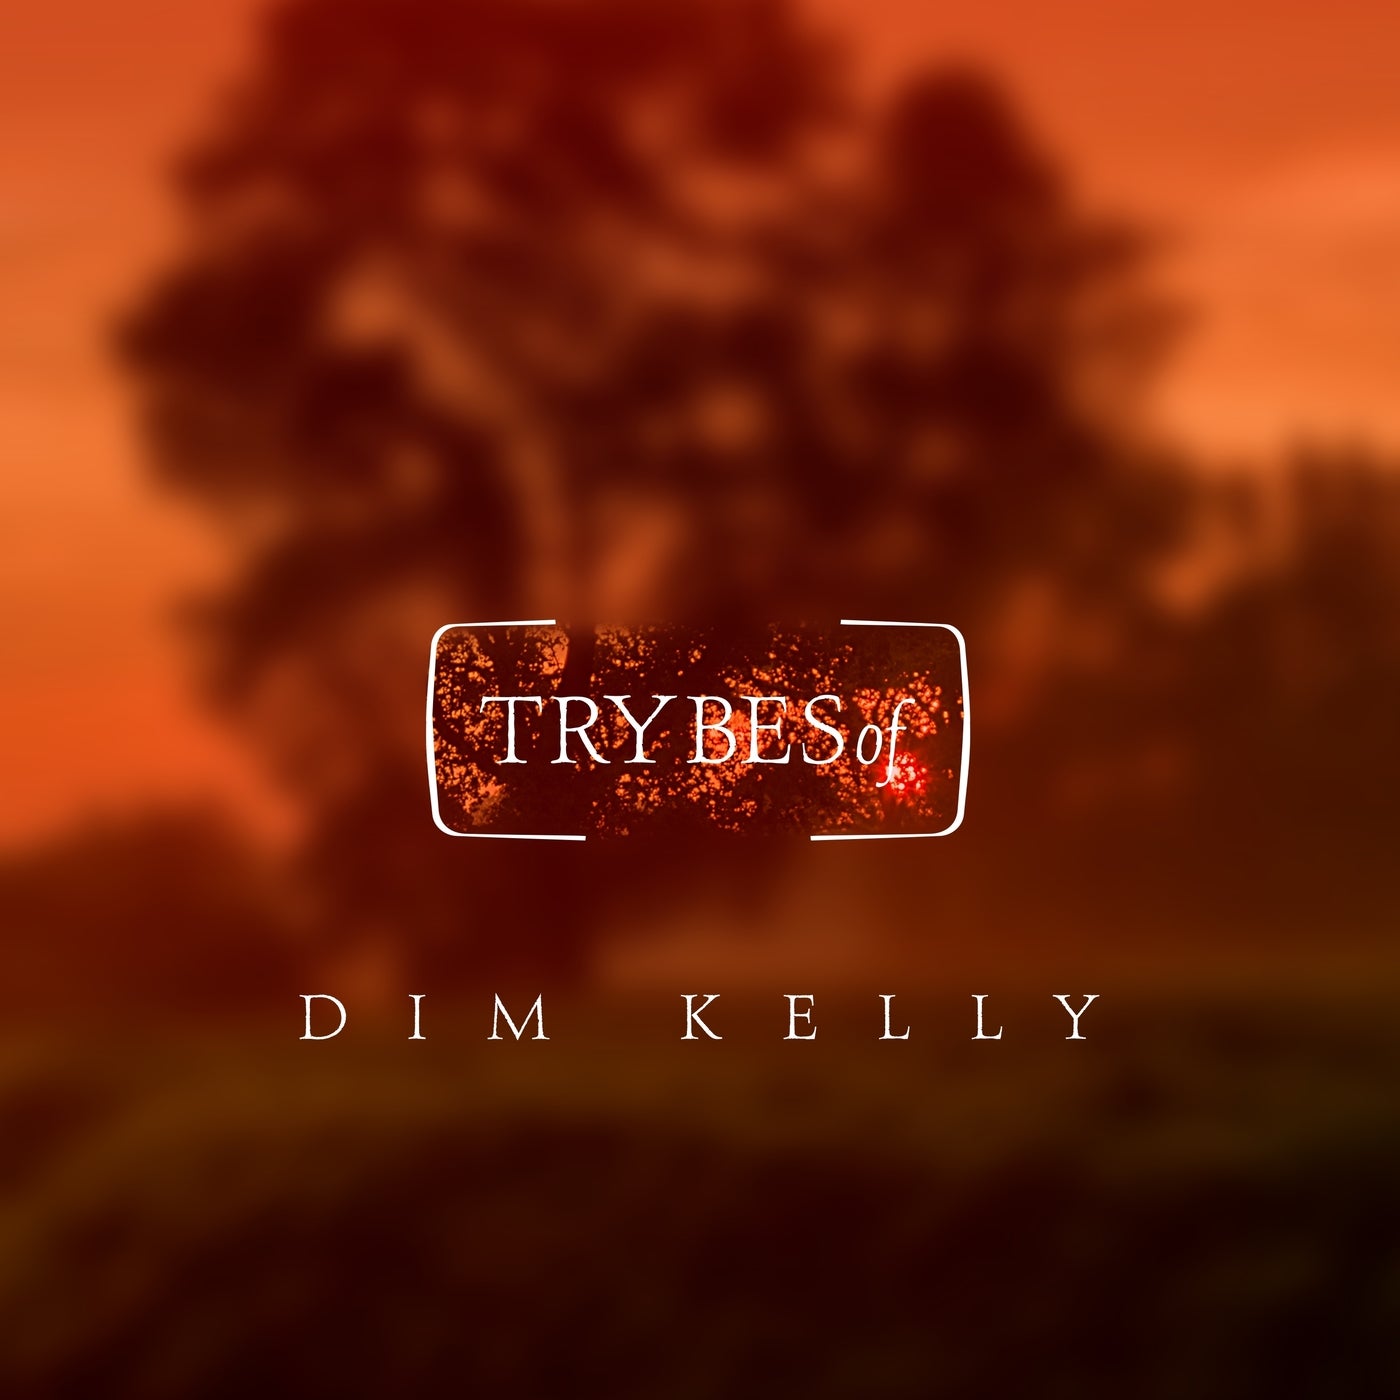 DIM KELLY – Bad Chlorure [TRY032B]